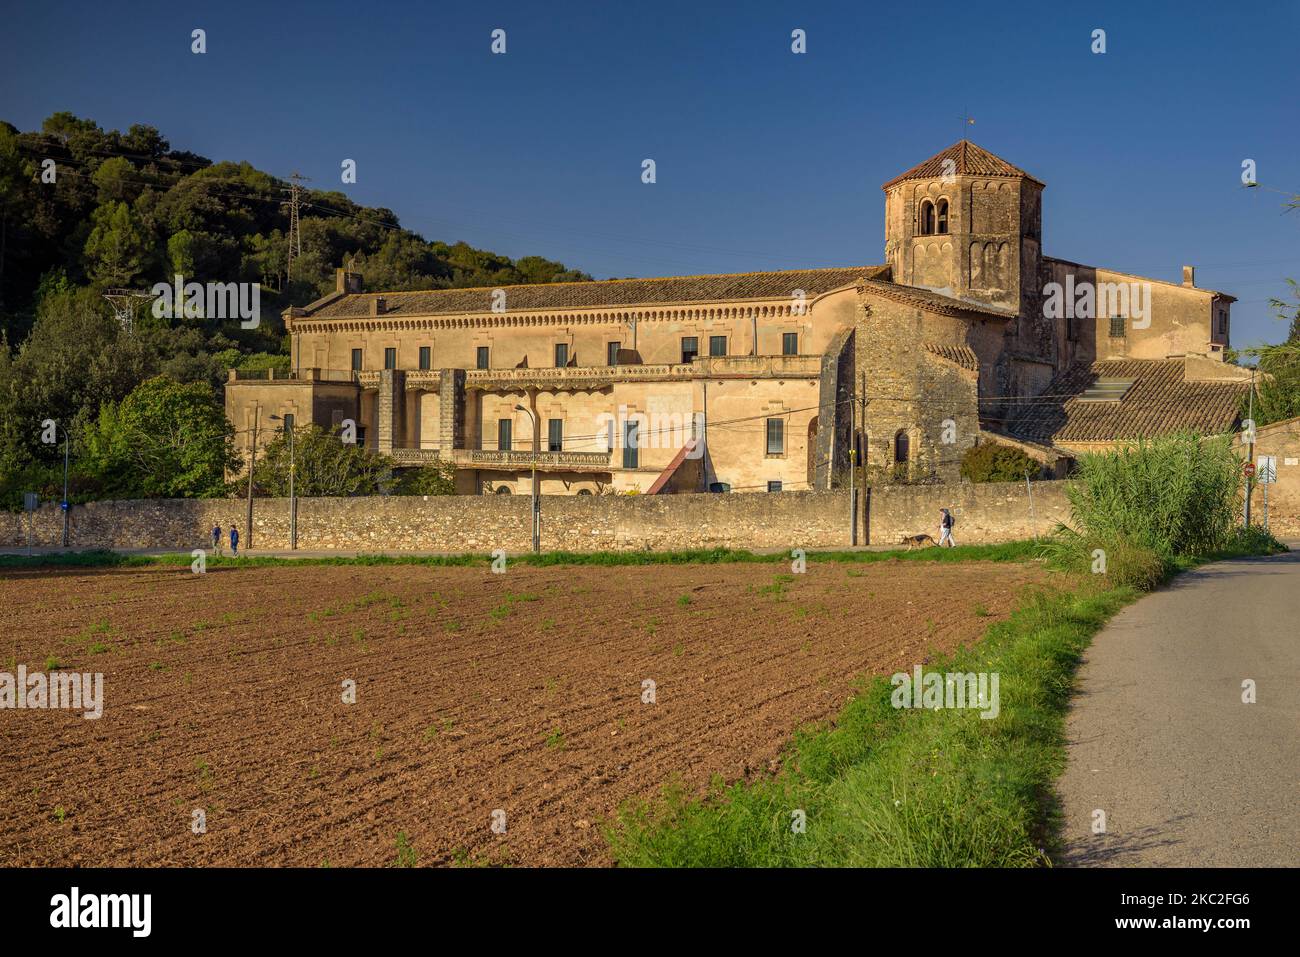 Sant Daniel Monastery in the Sant Daniel valley, near Girona (Catalonia, Spain) ESP: Monasterio de Sant Daniel en el valle de Sant Daniel, en Gerona Stock Photo